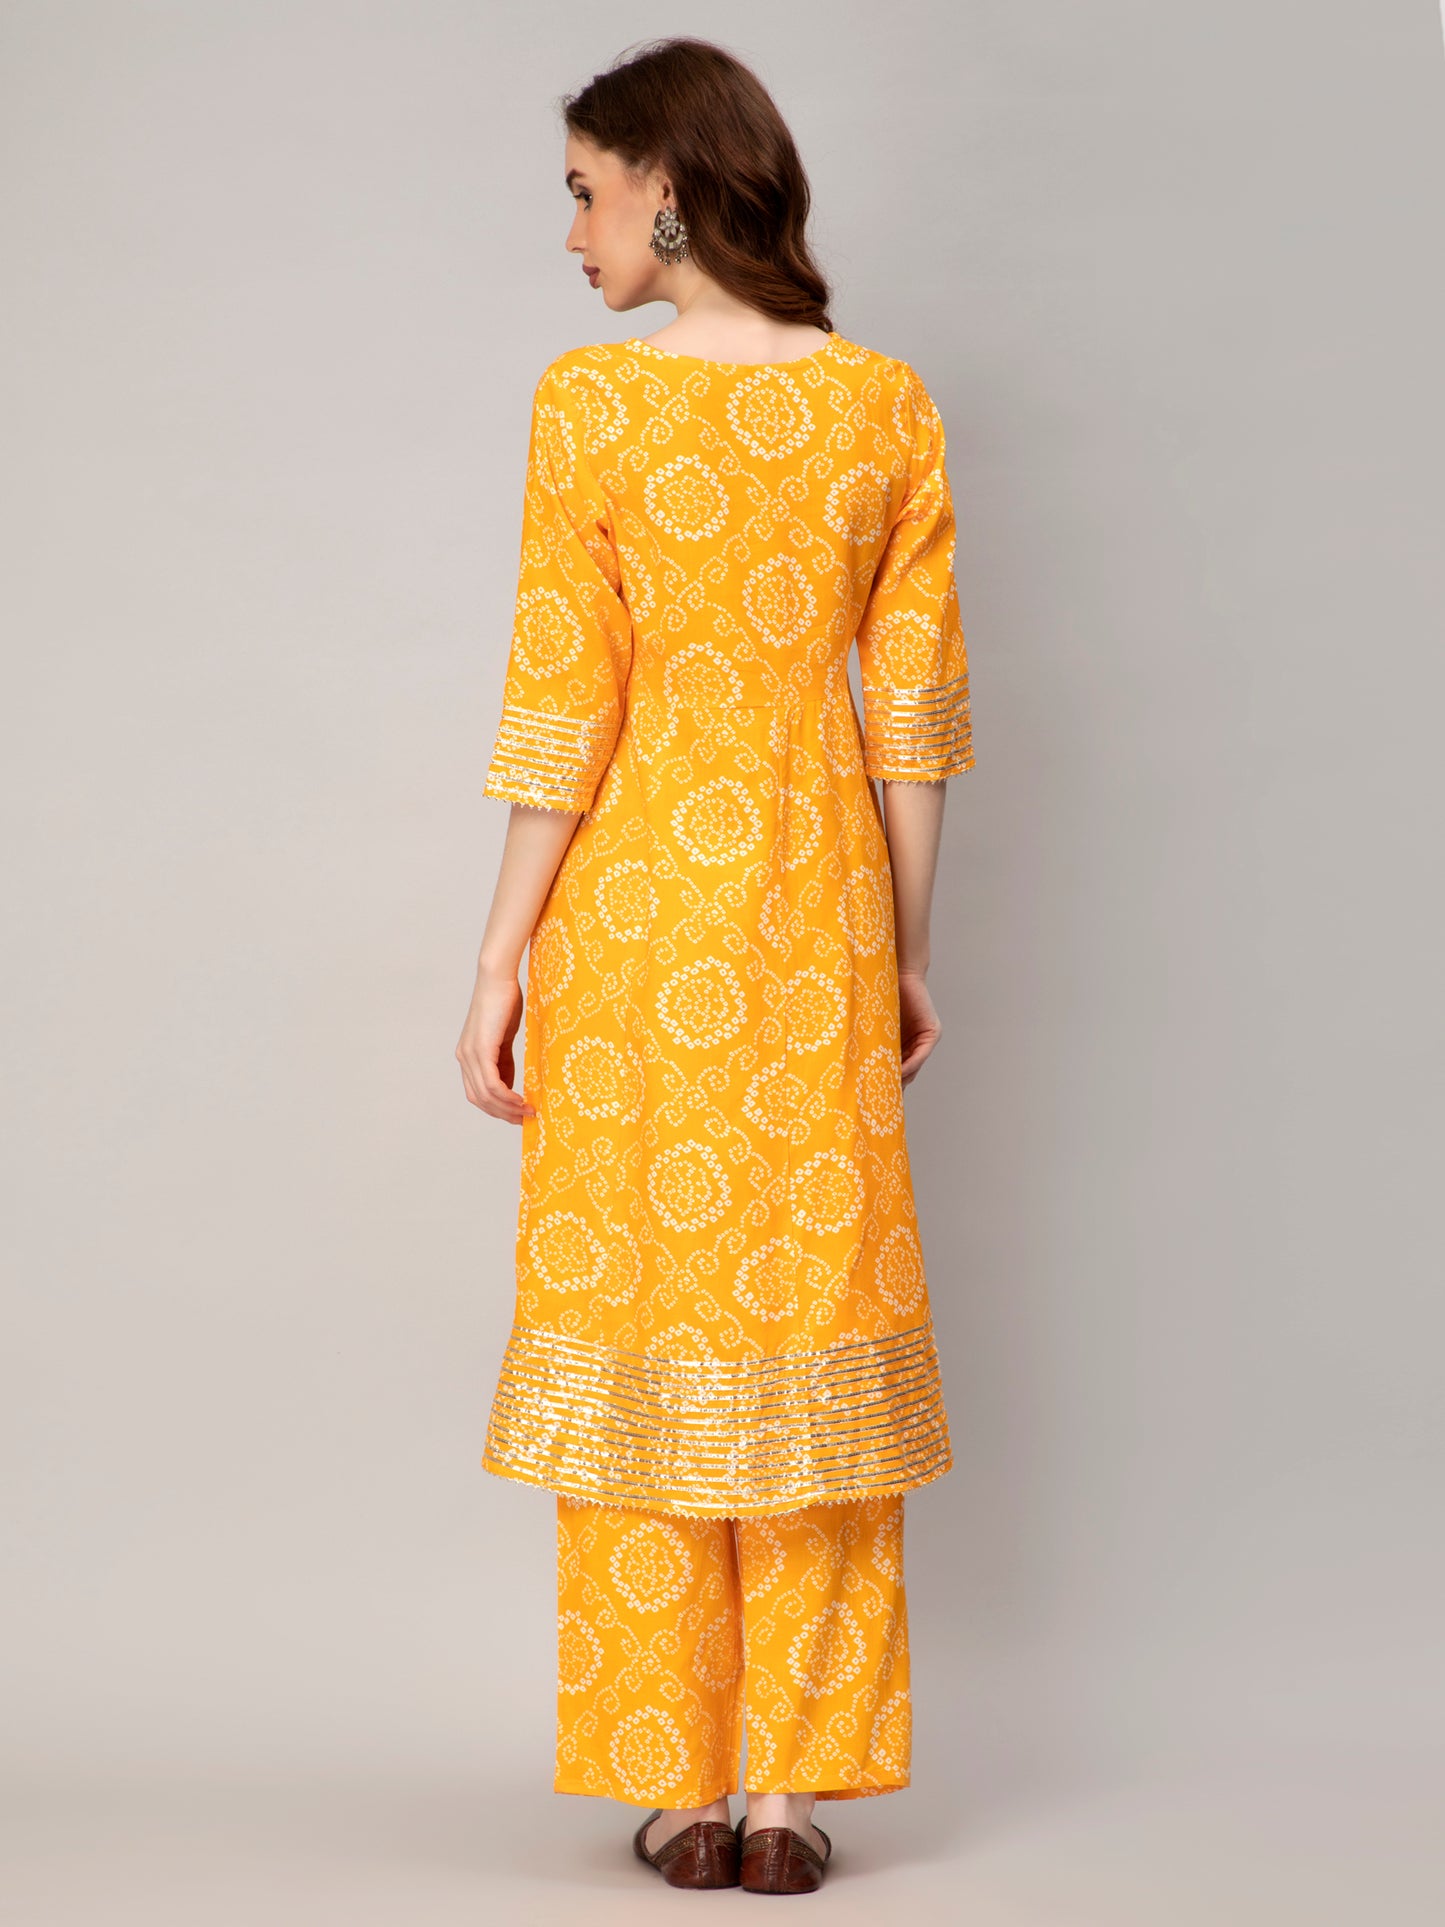 Bandhani Printed Yellow Kurta and Pant set with Dupatta with Embroidery work on yoke